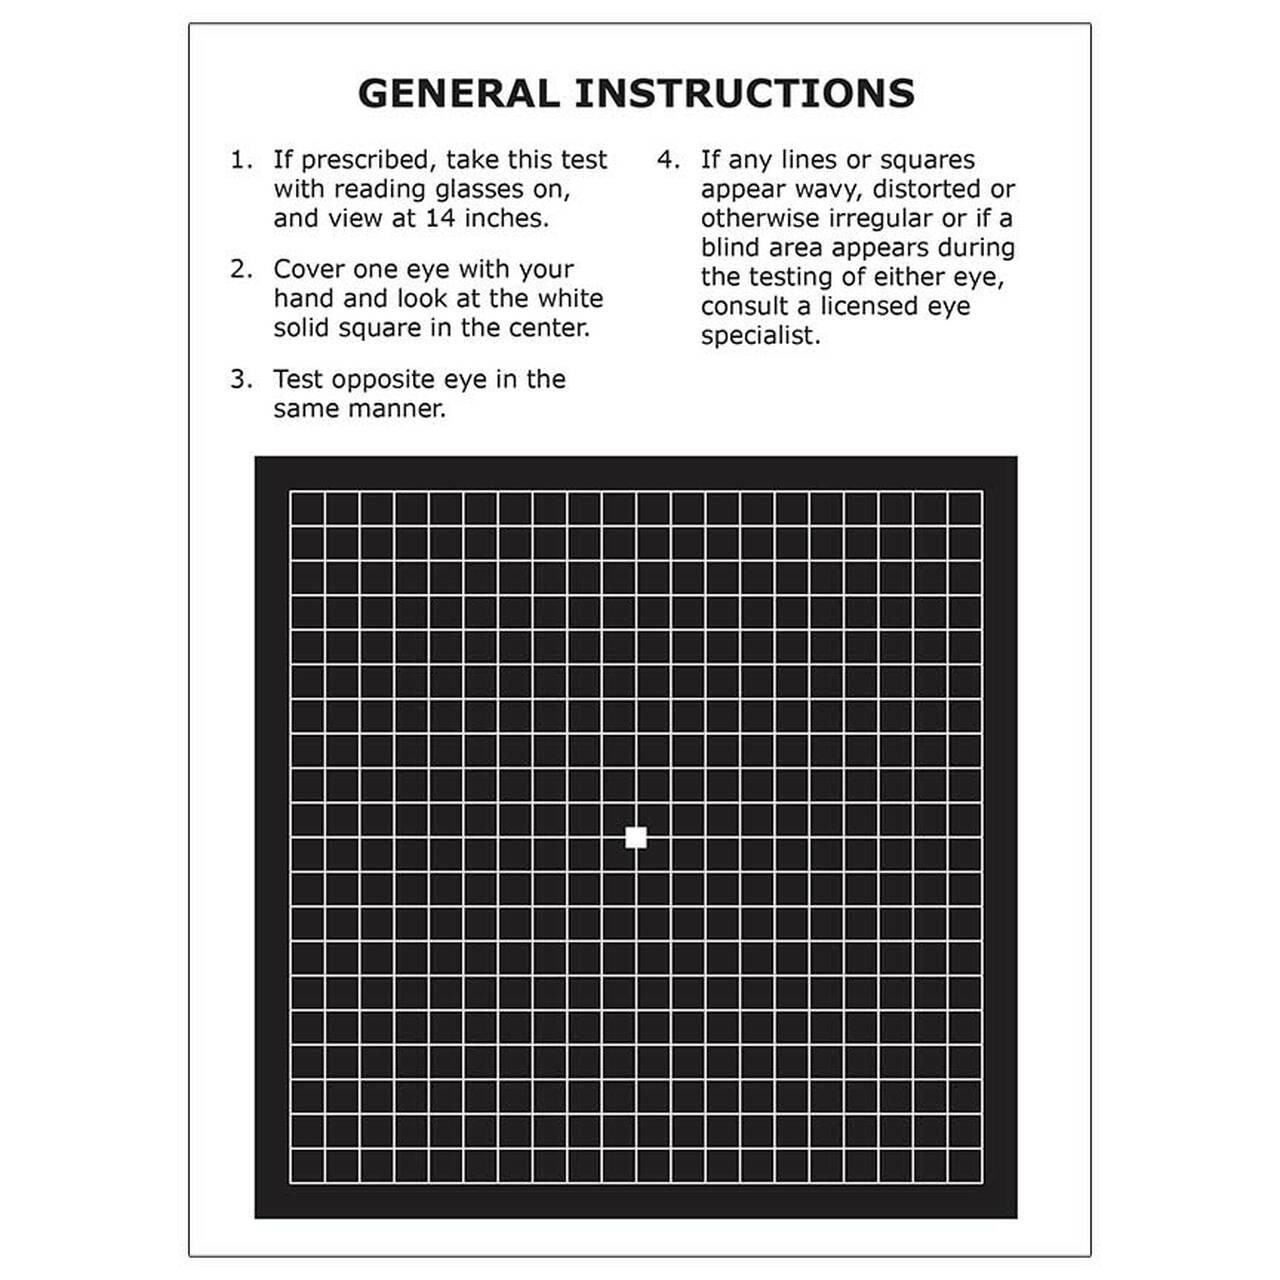 Amsler Grid - Free Printable PDF, Eye Specialist Institute